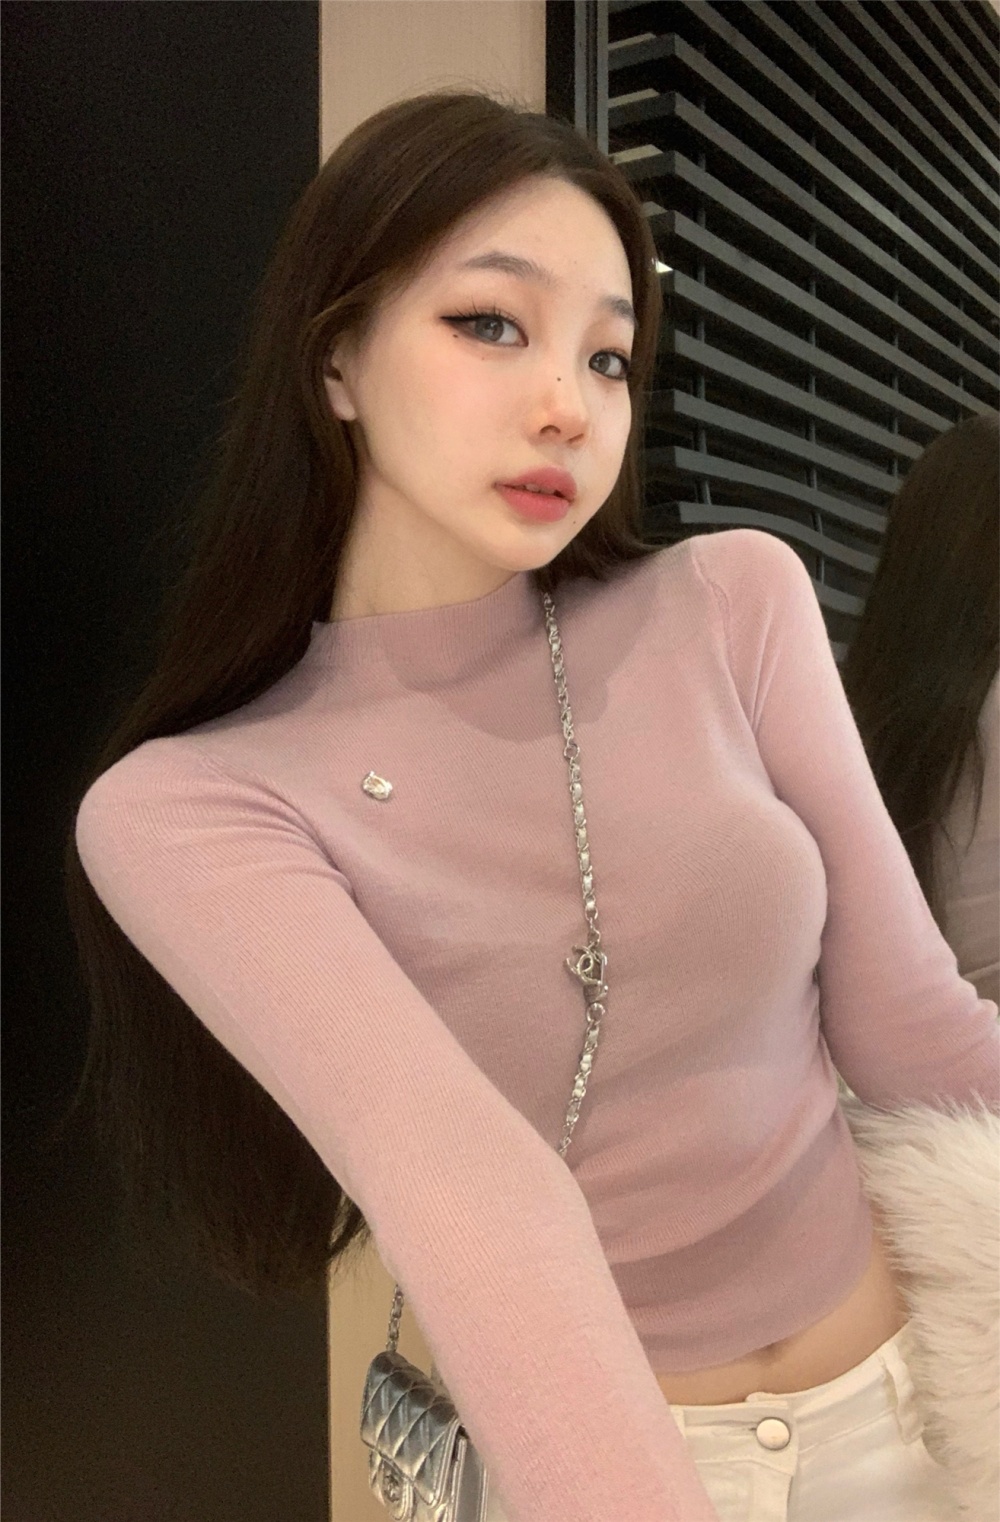 Winter slim tops long sleeve pink sweater for women